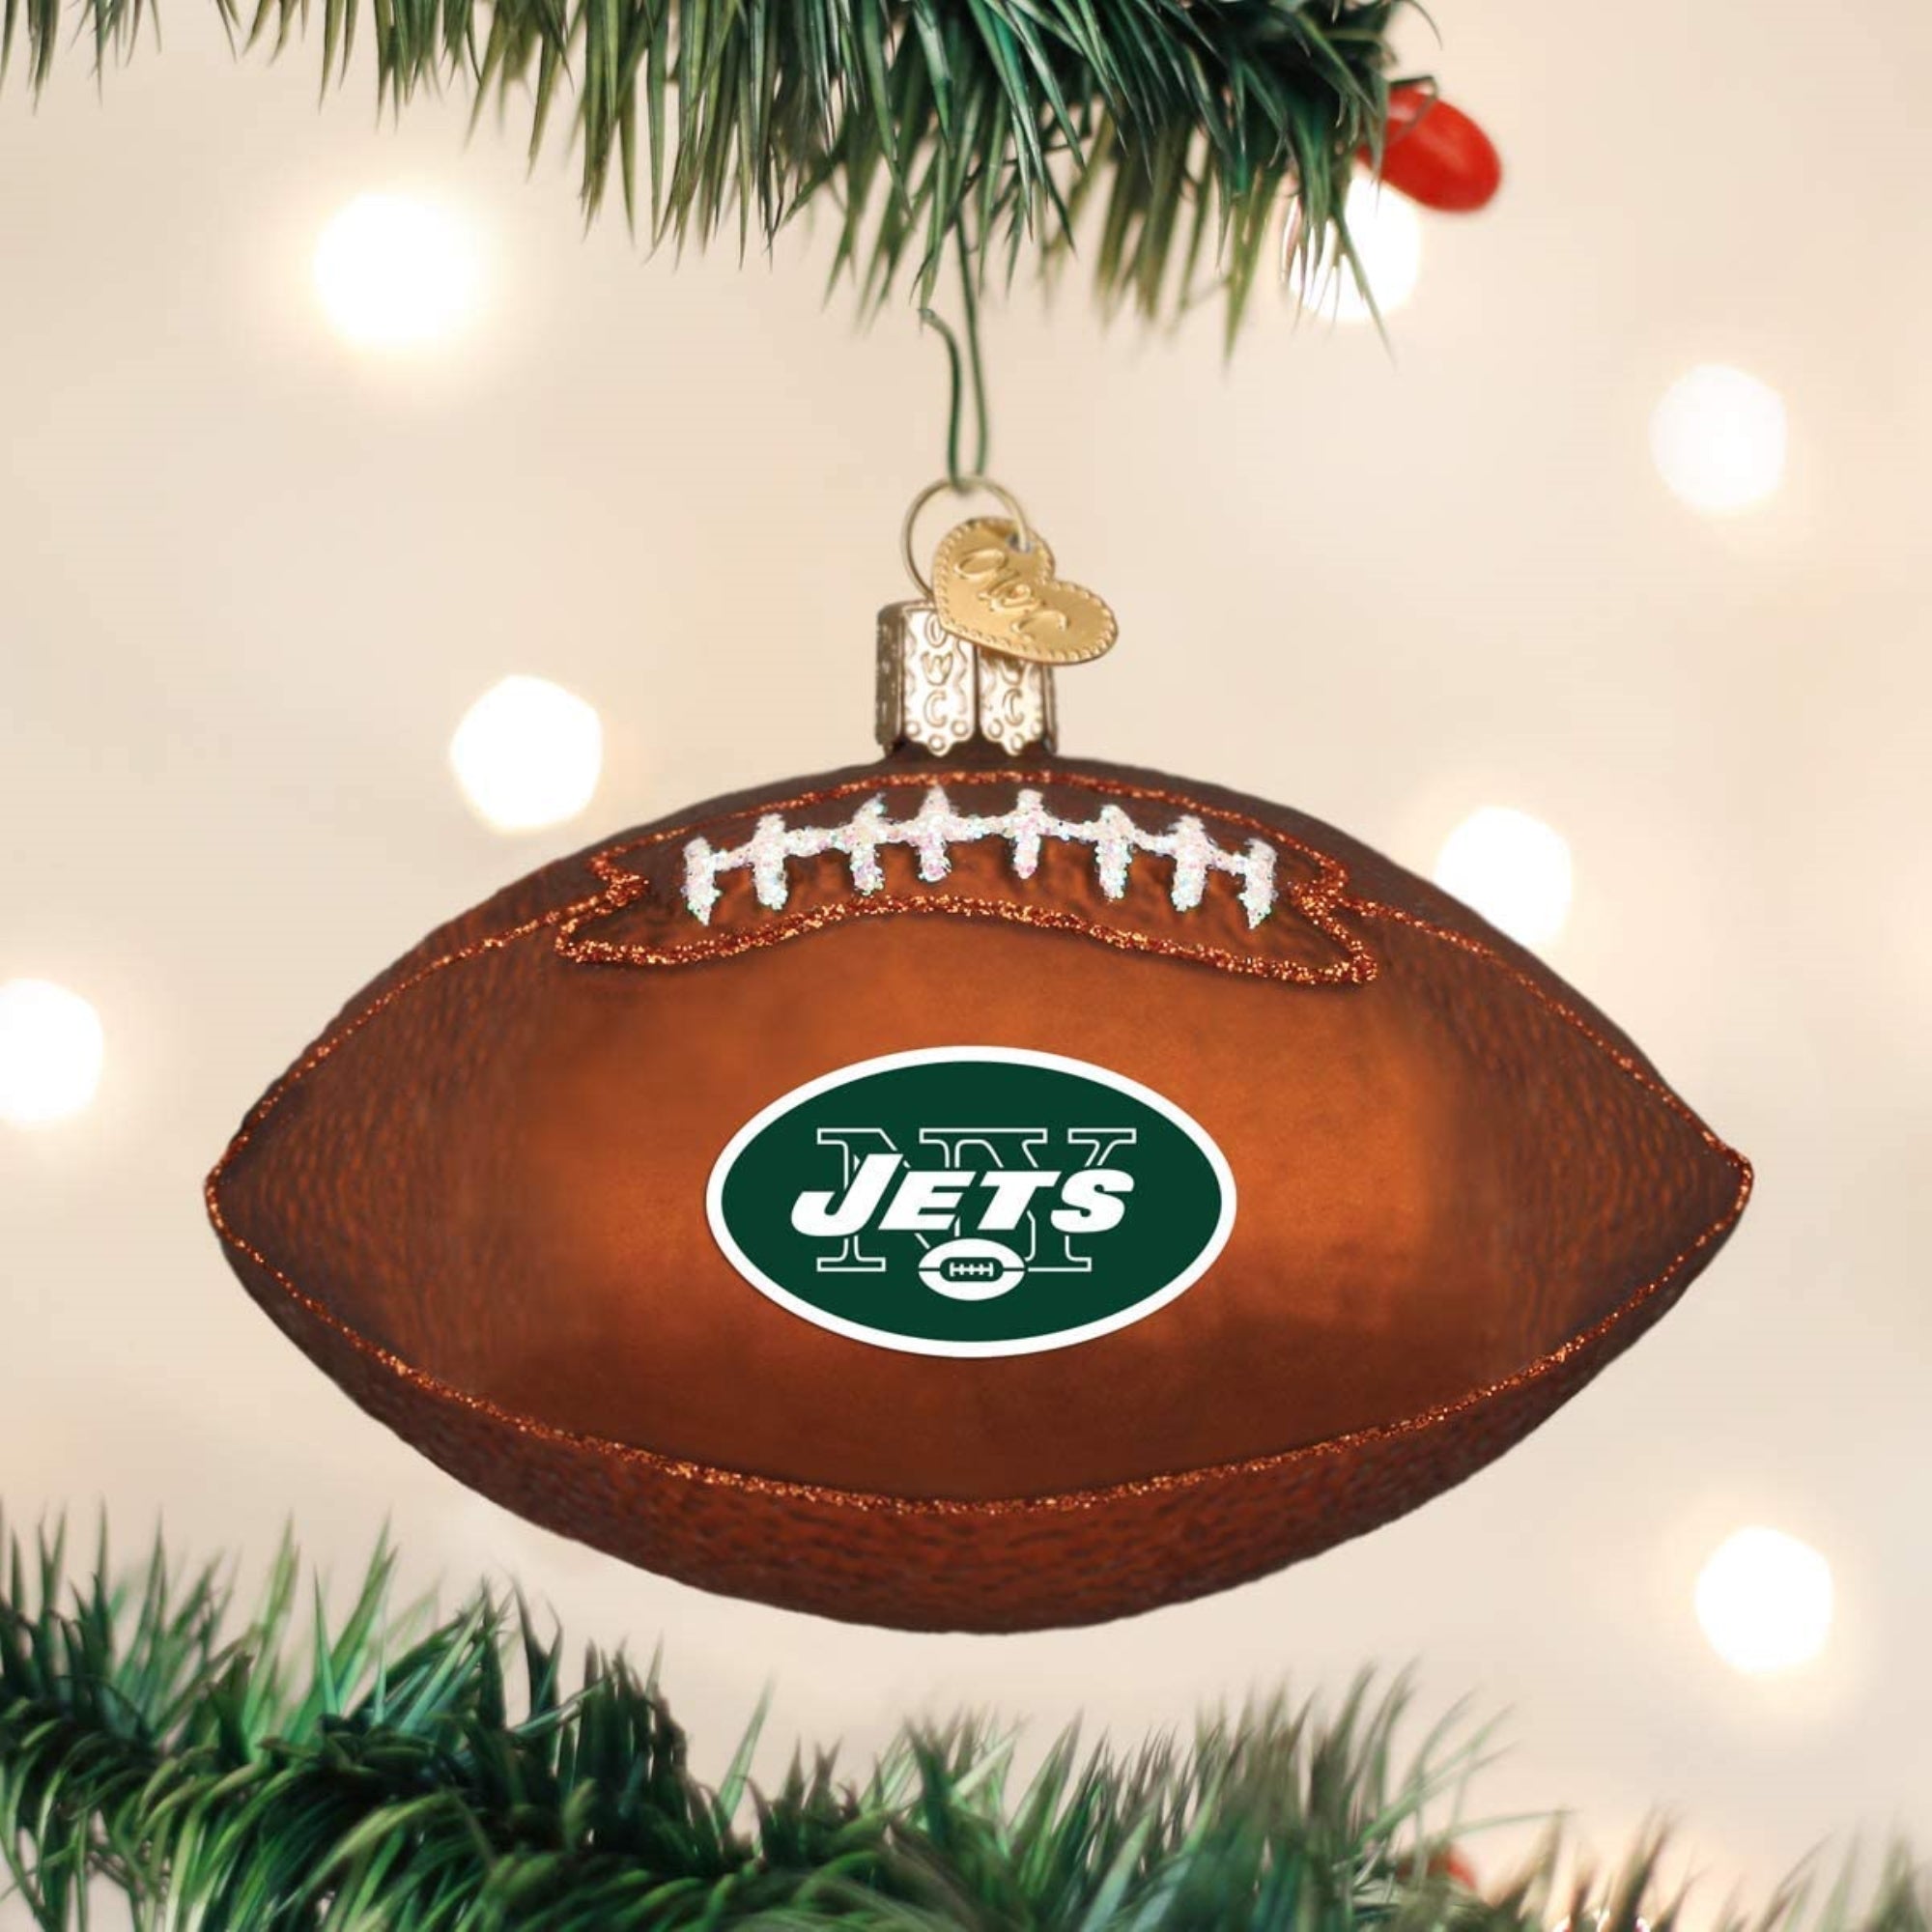 Old World Christmas New York Jets Football Ornament For Christmas Tree